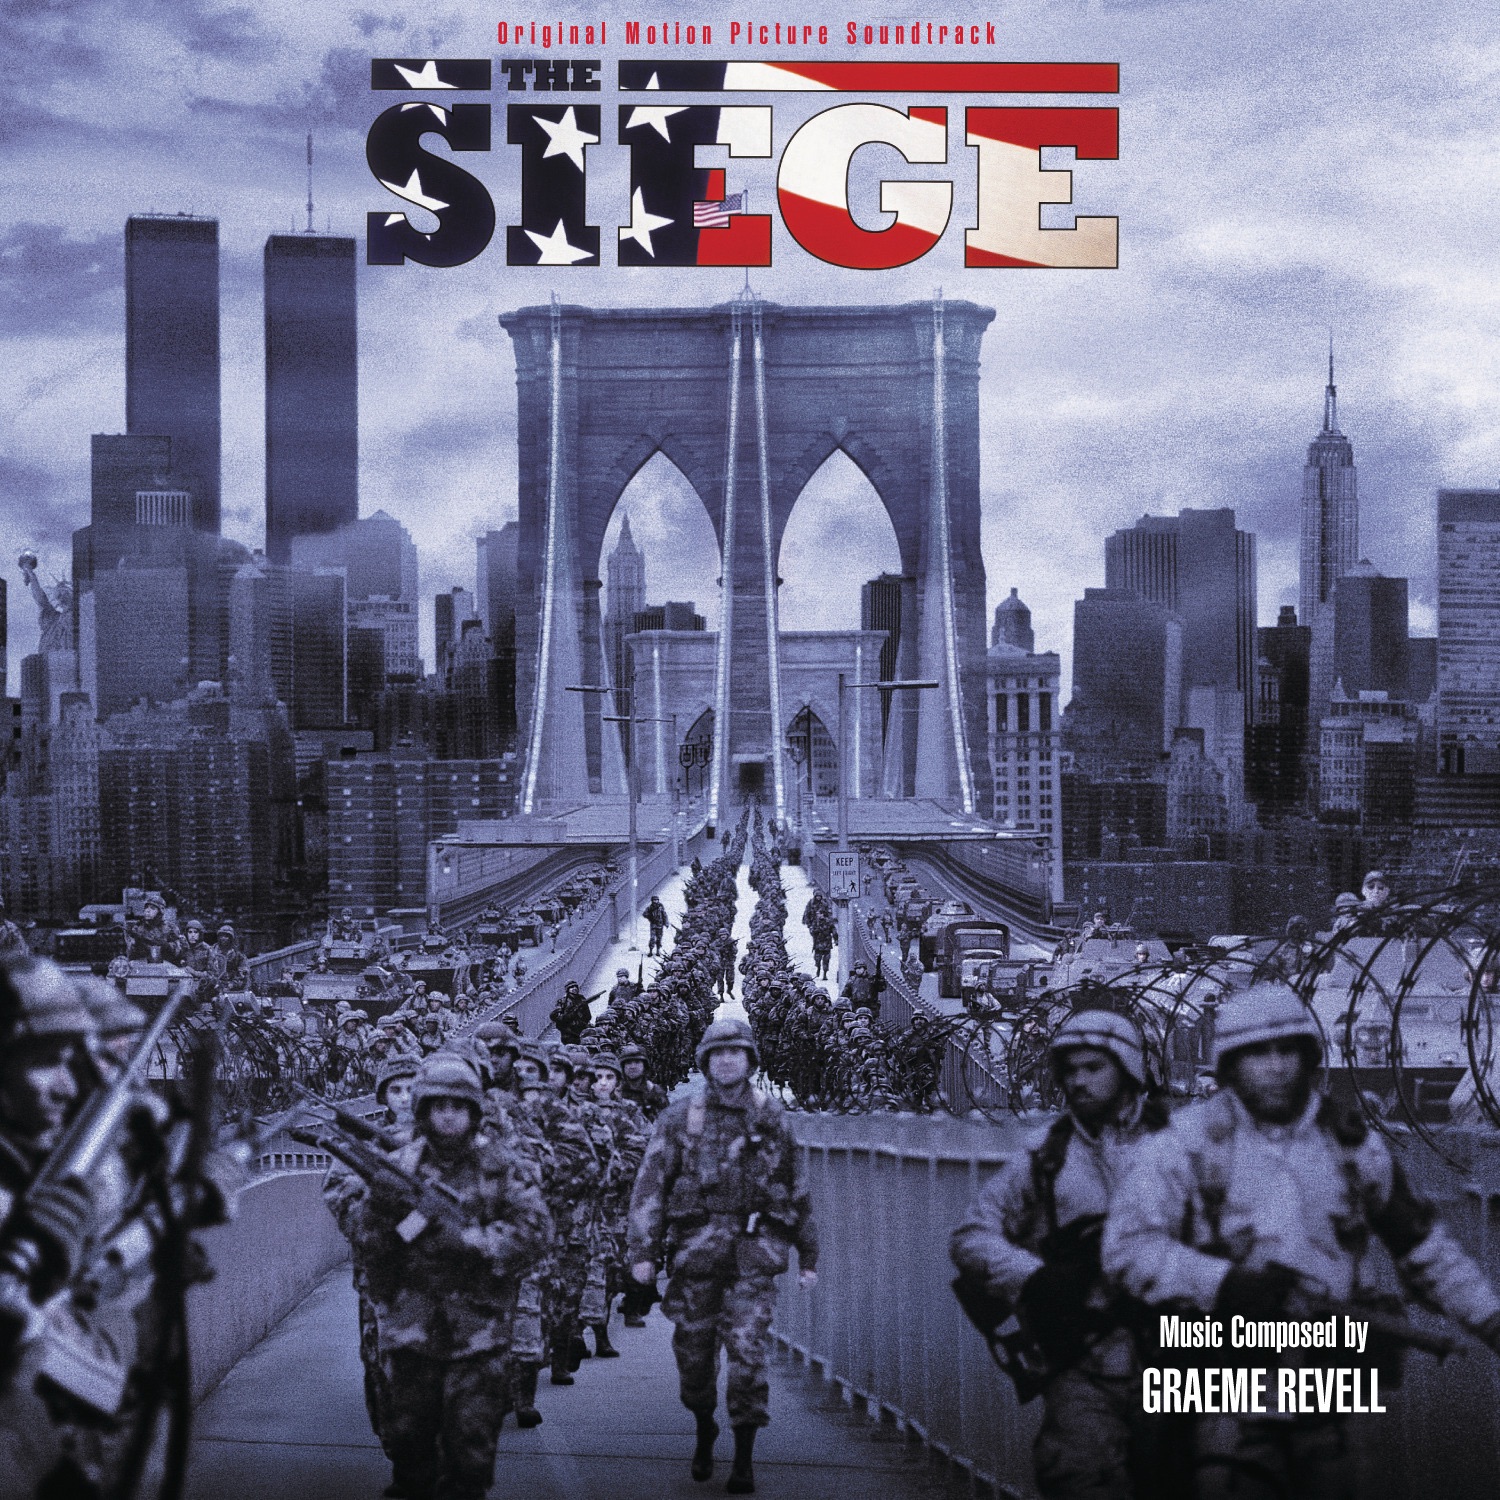 Graeme revell 3. Siege группа. The Siege OST. Graeme Revell. Siege of Power альбомы обложки.